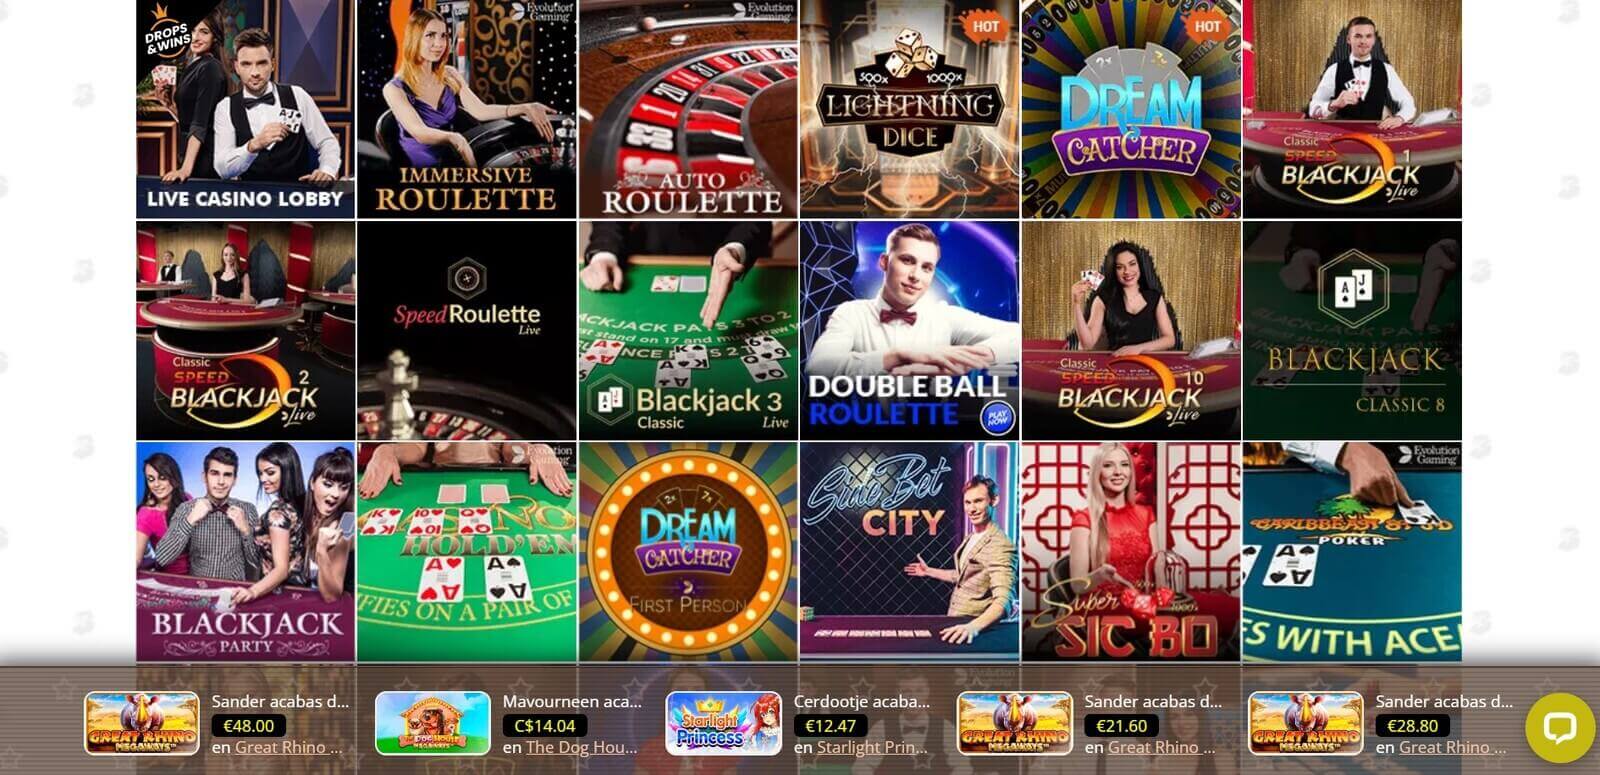 Juegos en vivo de casino Bob en Latinoamérica